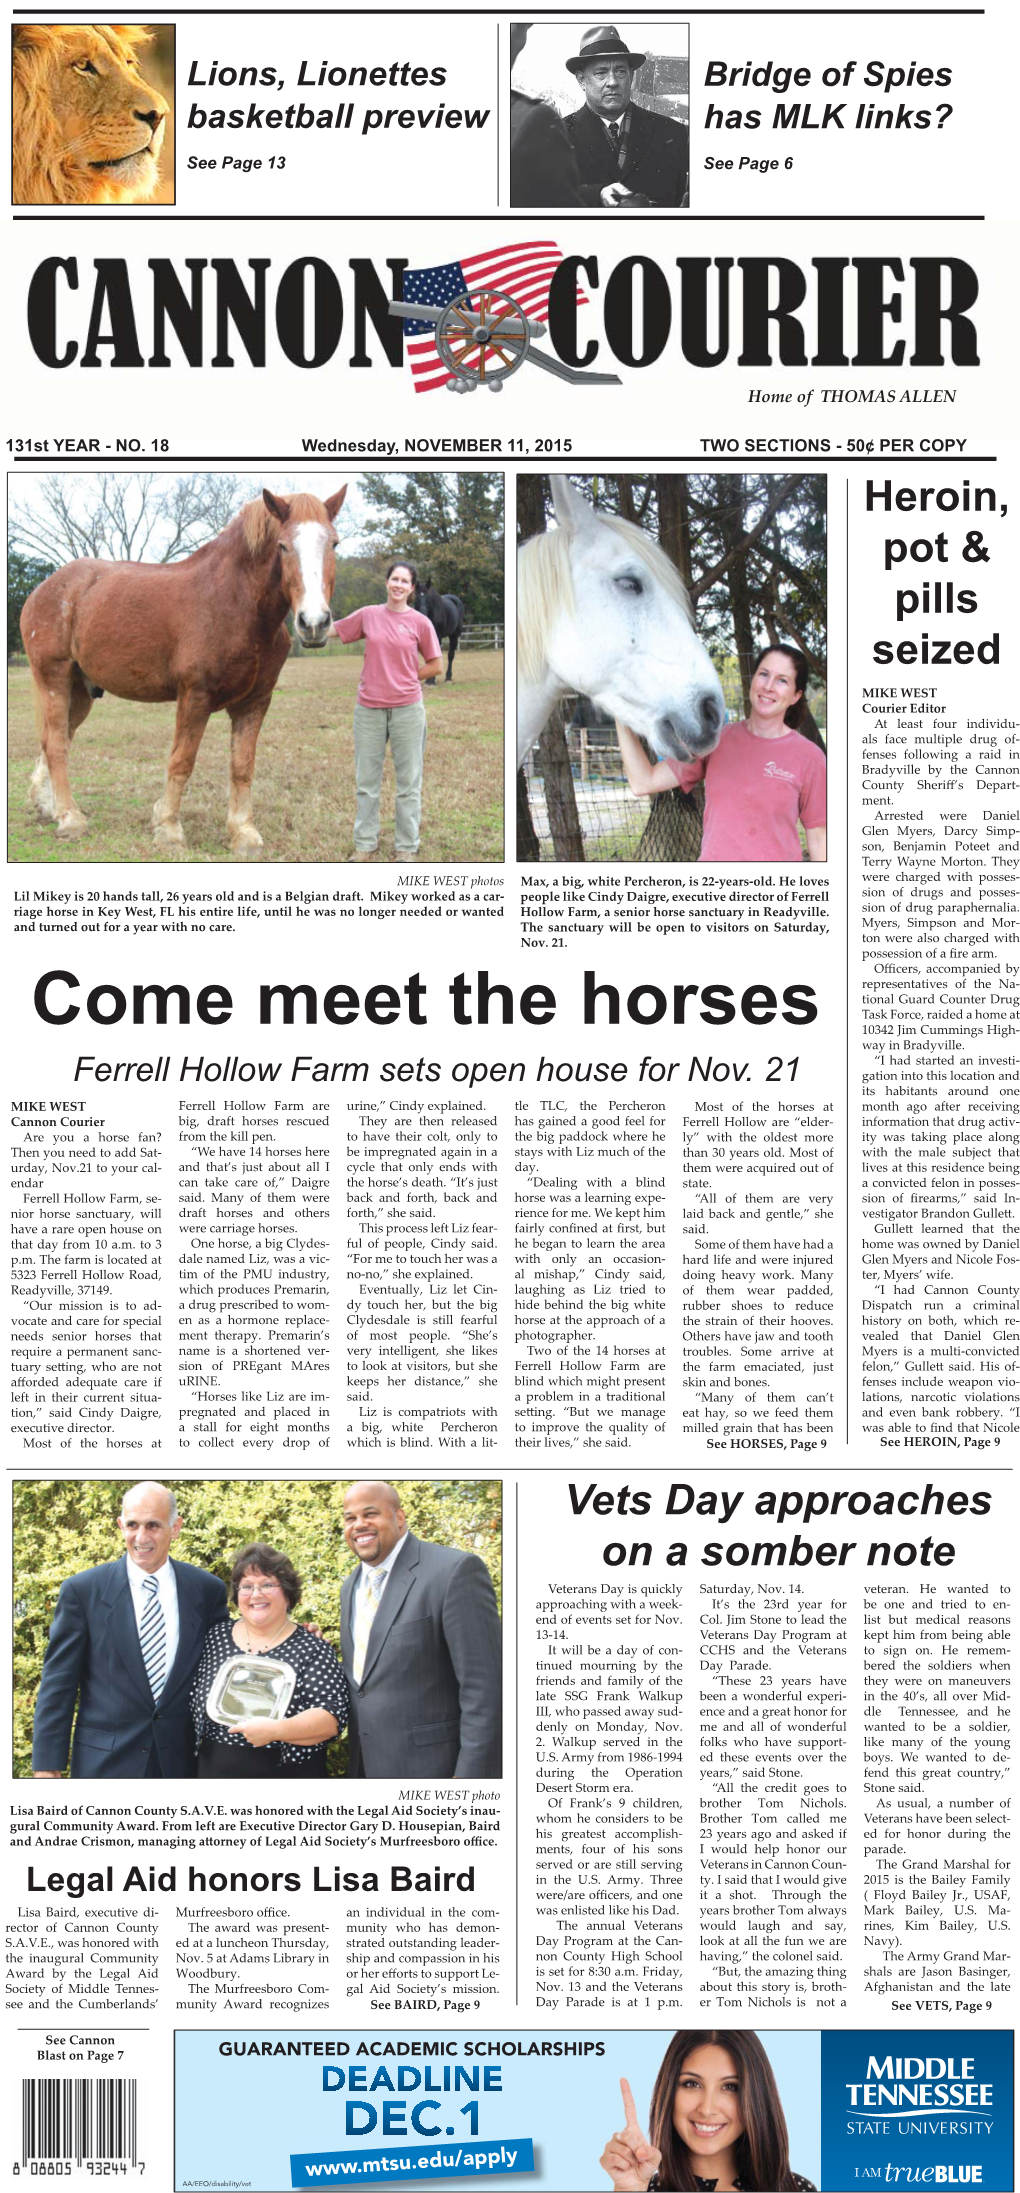 Come Meet the Horses 10342 Jim Cummings High- Way in Bradyville